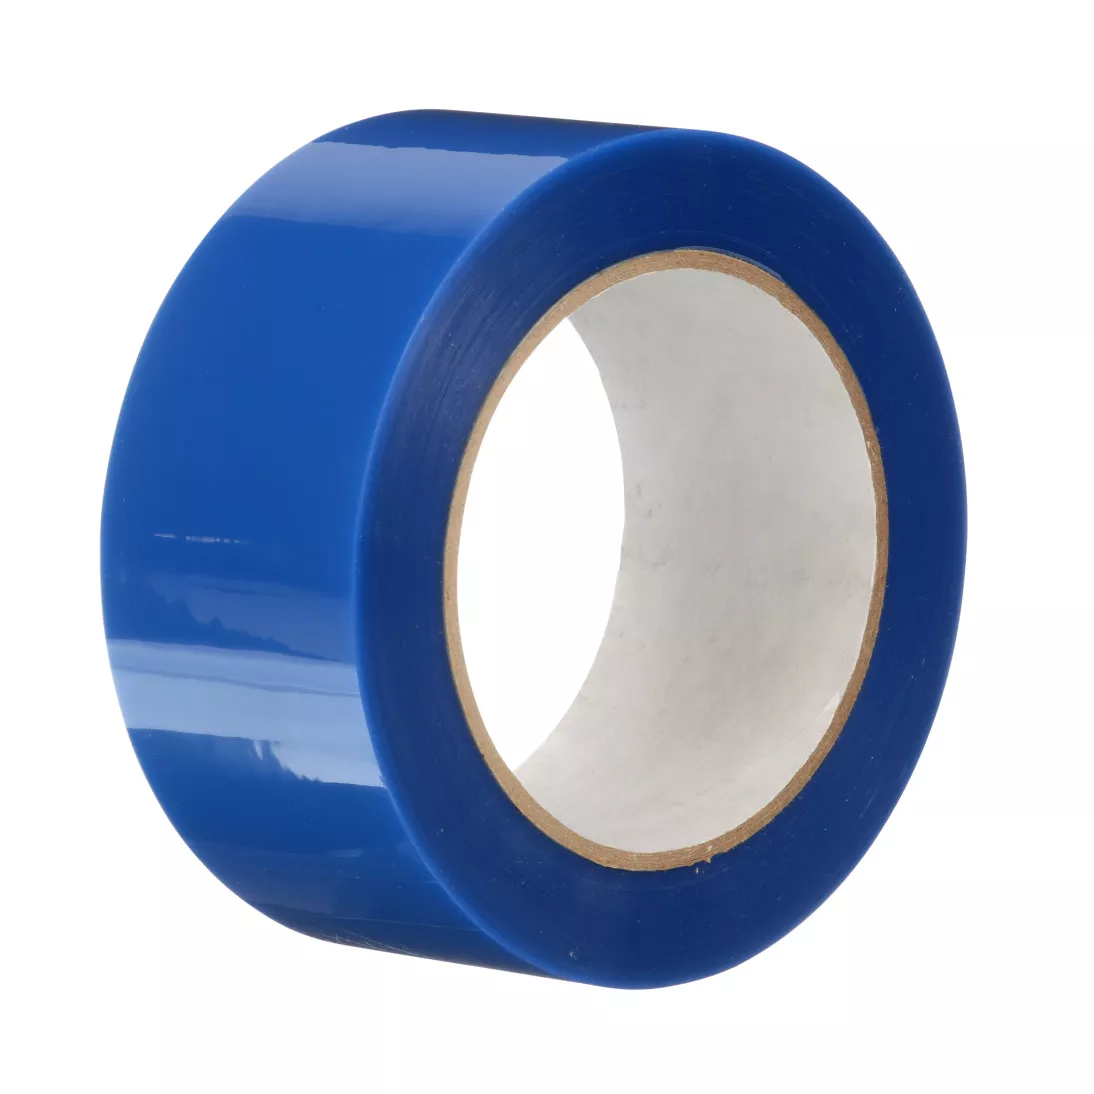 3M™ Polyester Silicone Splicing Tape 981, Blue, 48 mm x 65.8 m, 24 rolls
per case